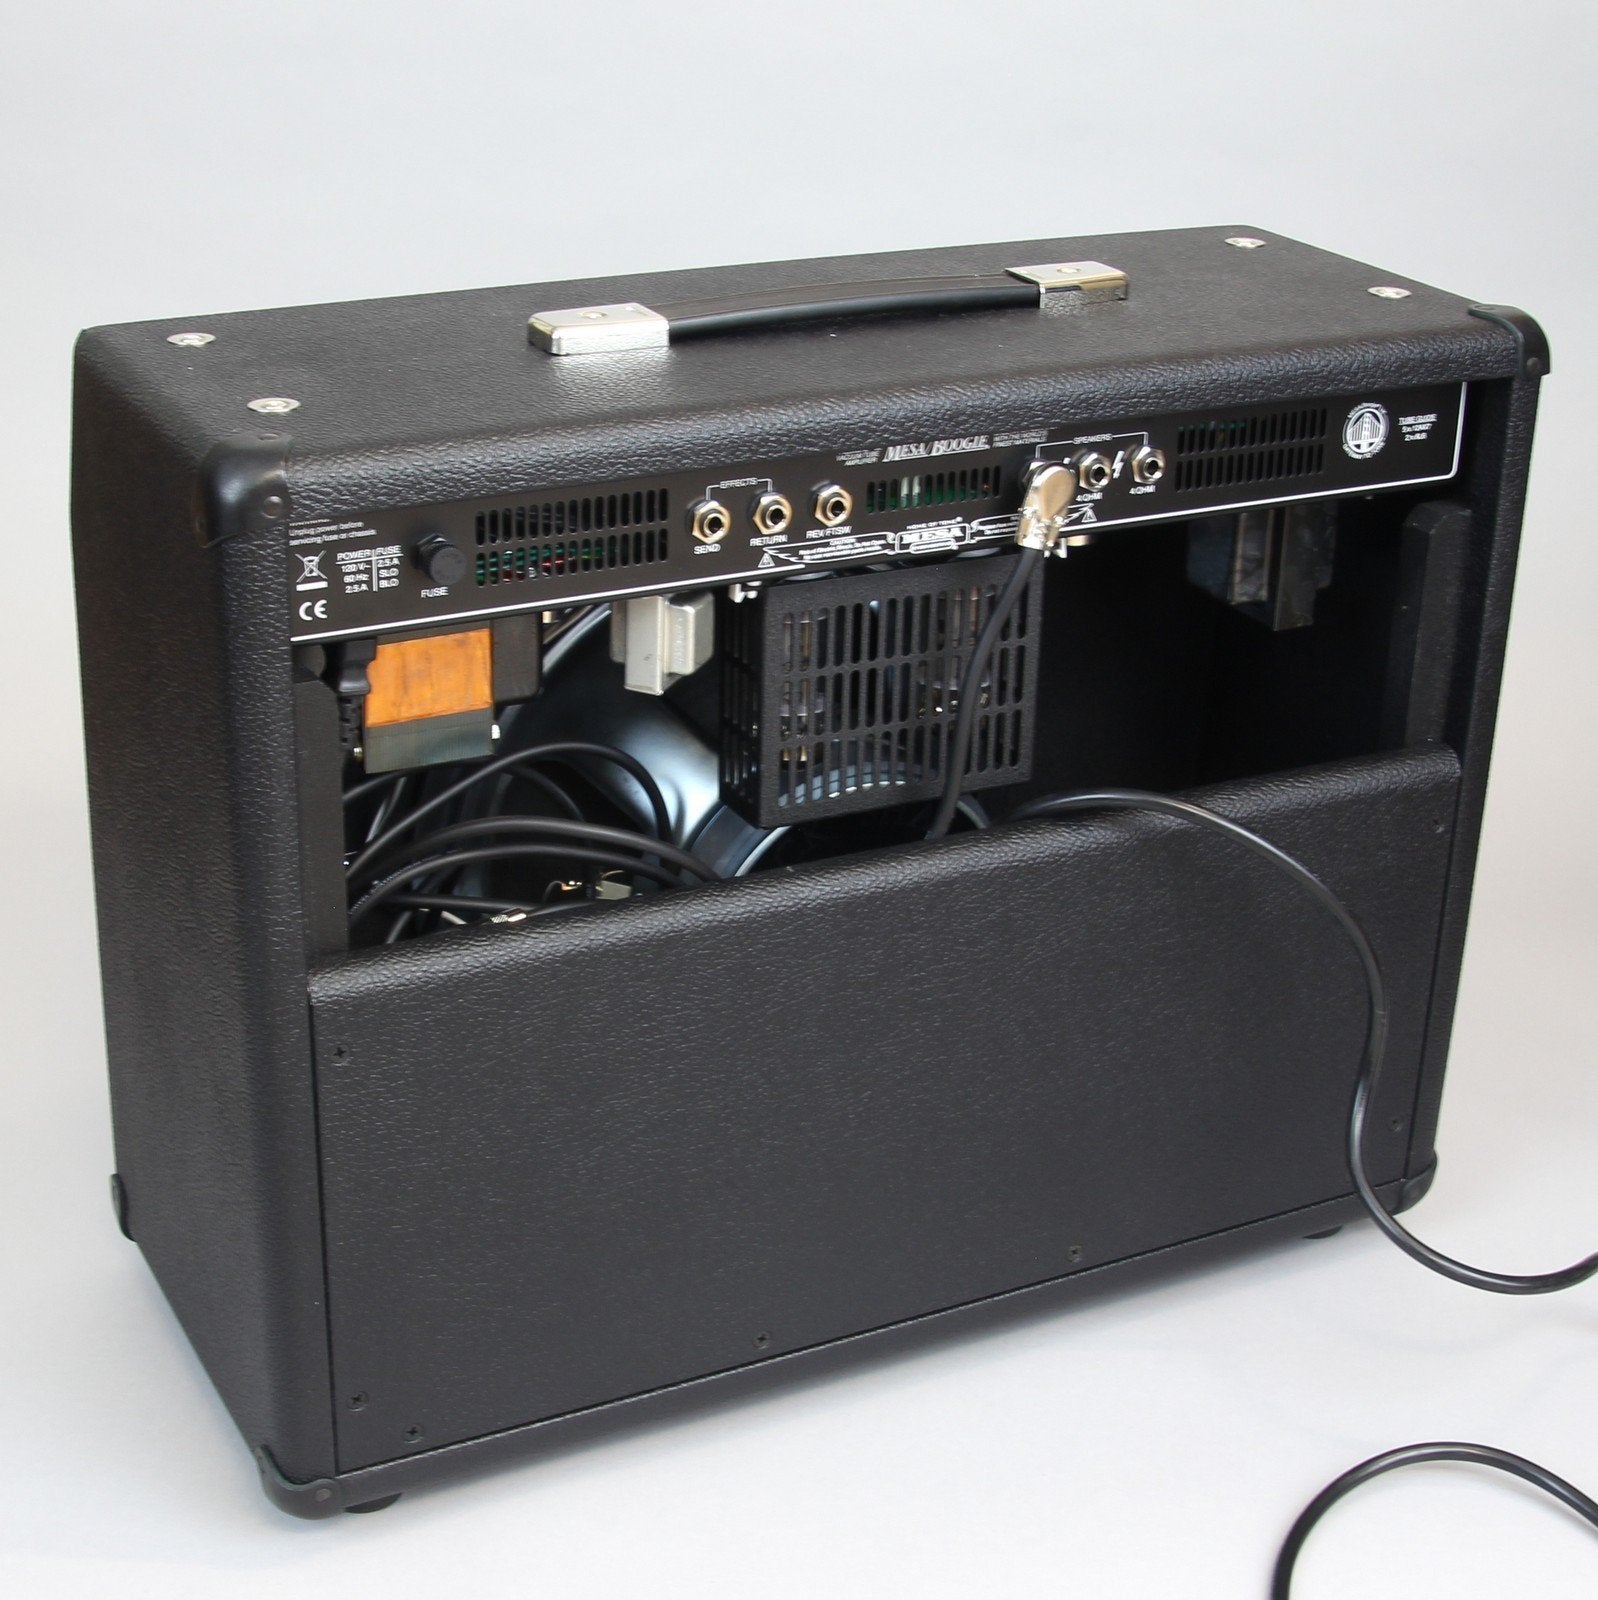 Mesa Boogie Fillmore 50 Combo Amplifier